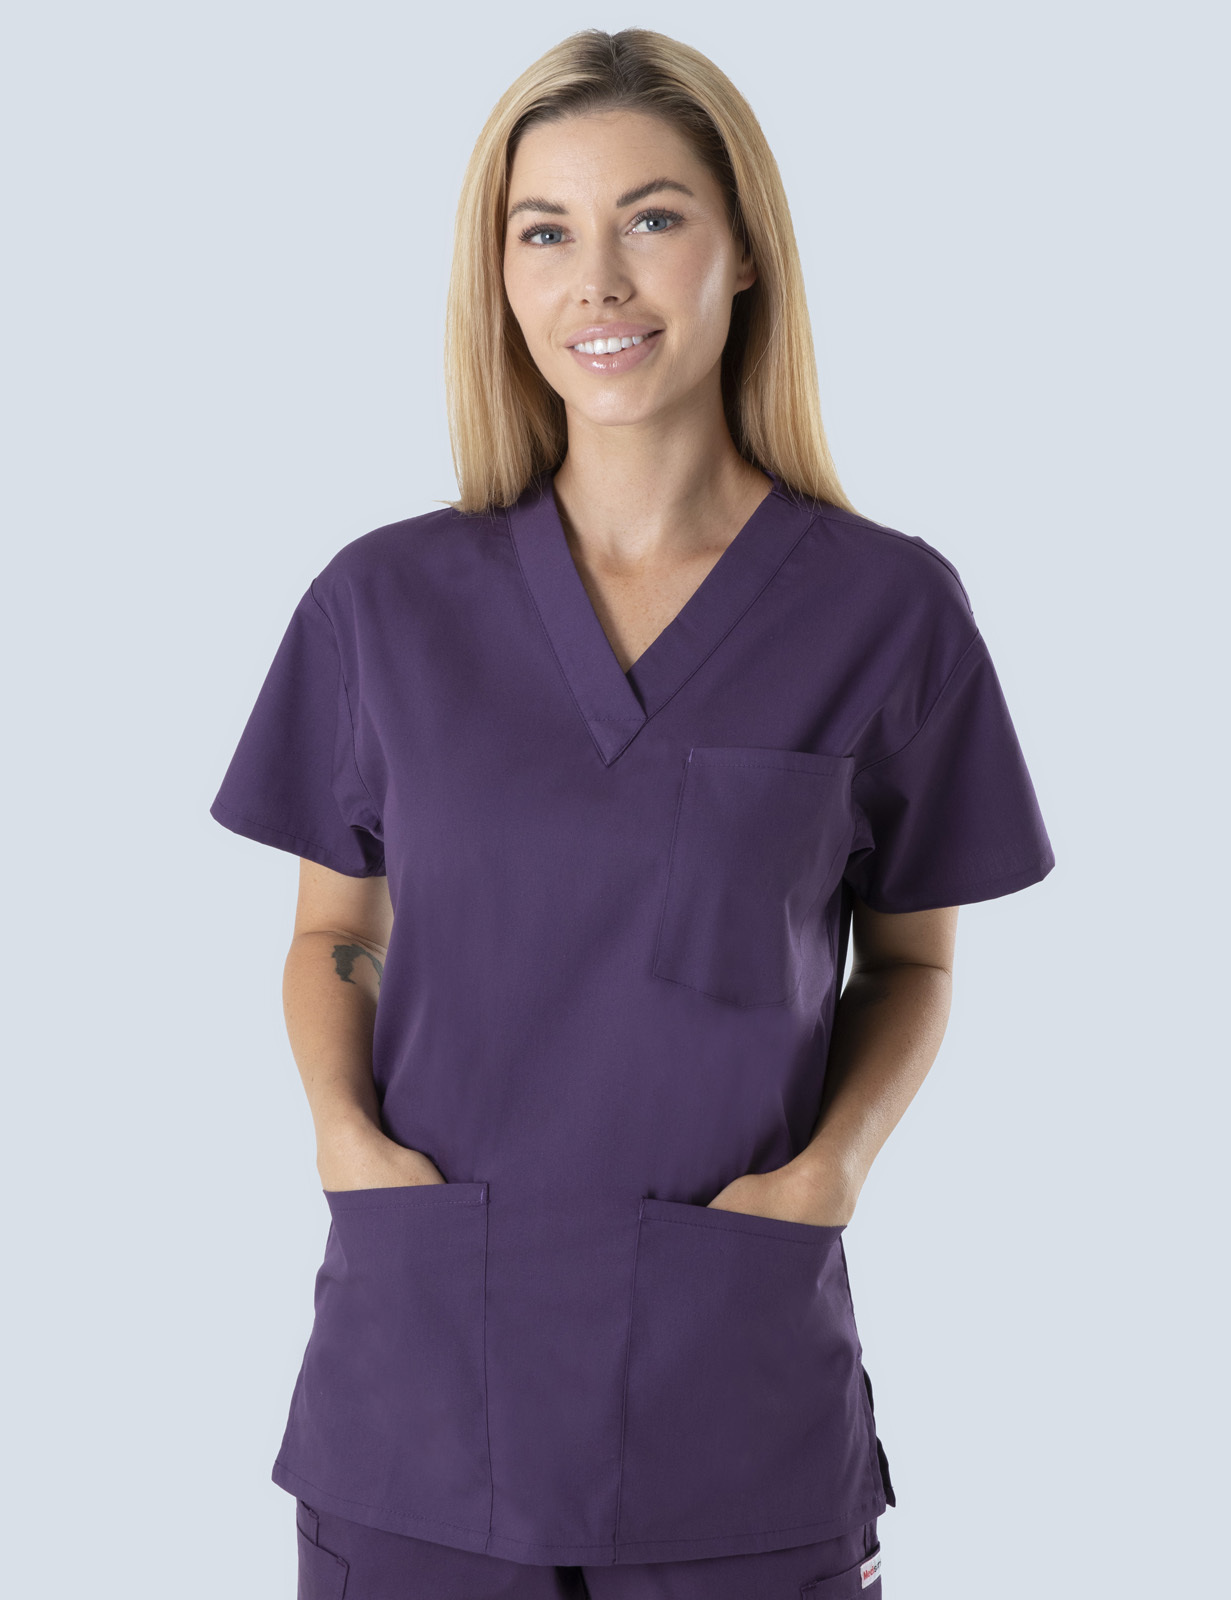 Northern Hospital - ED Nurse (4 Pocket Scrub Top in Aubergine incl Logos)